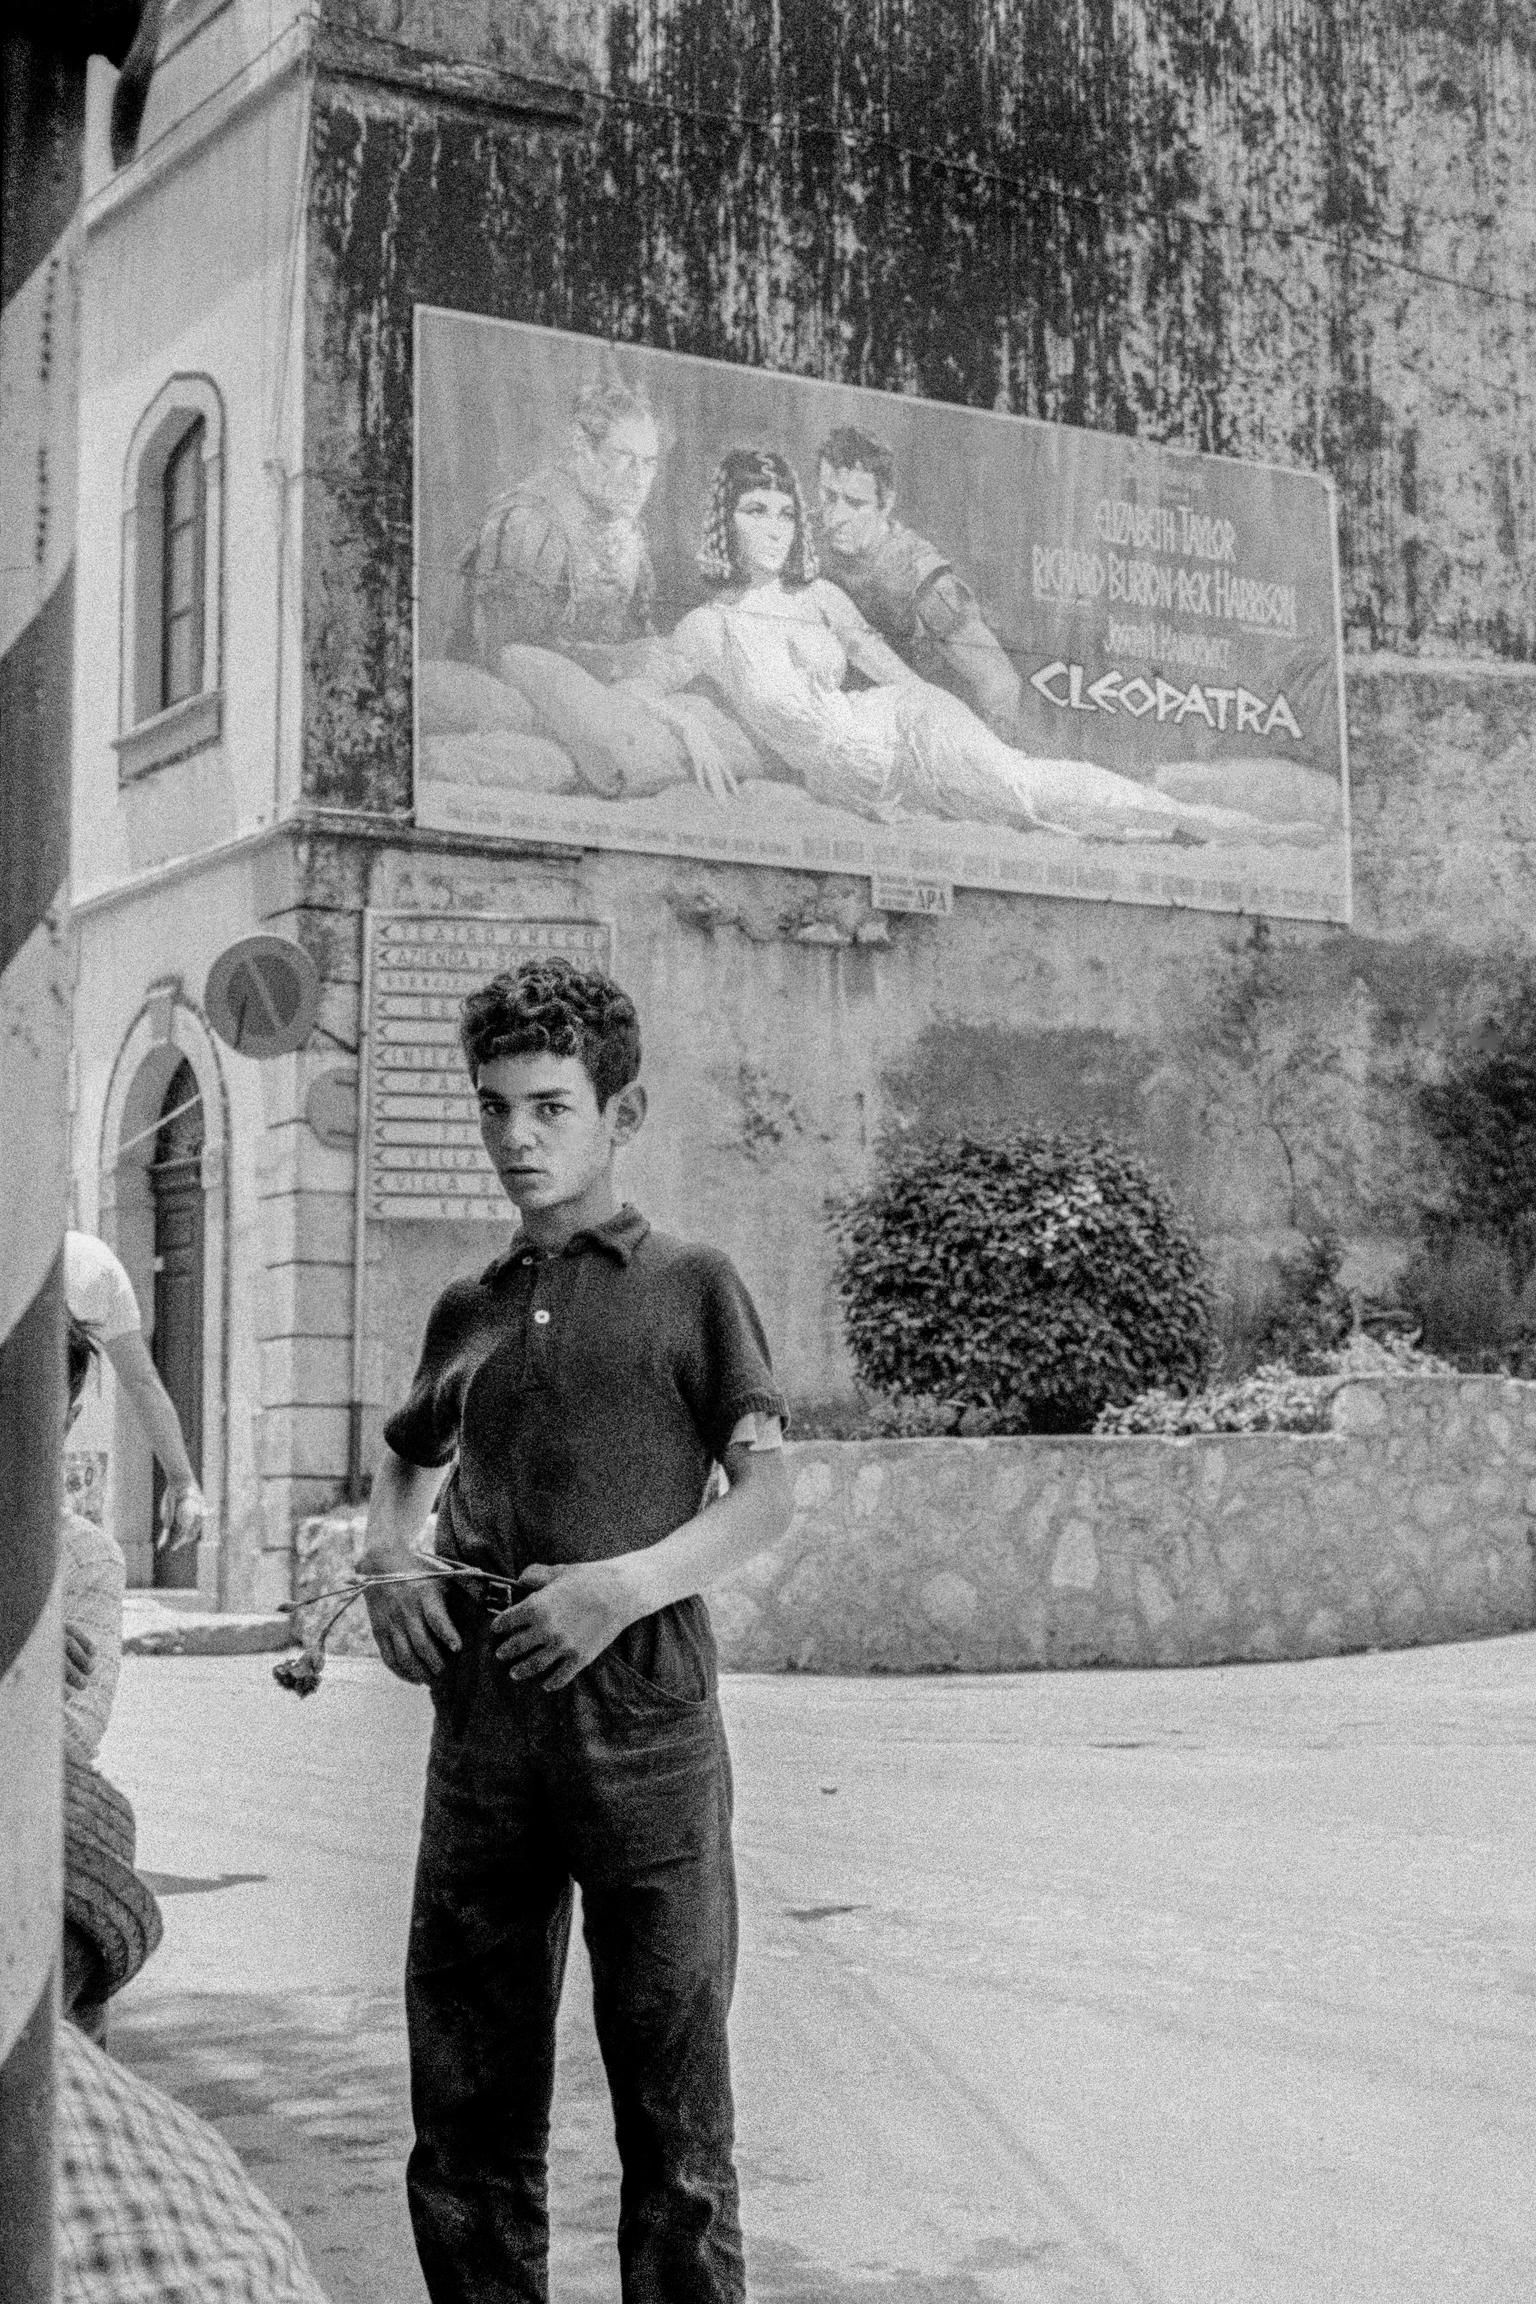 Boy and flower plus cinema poster. Taormina, Sicily. Italy